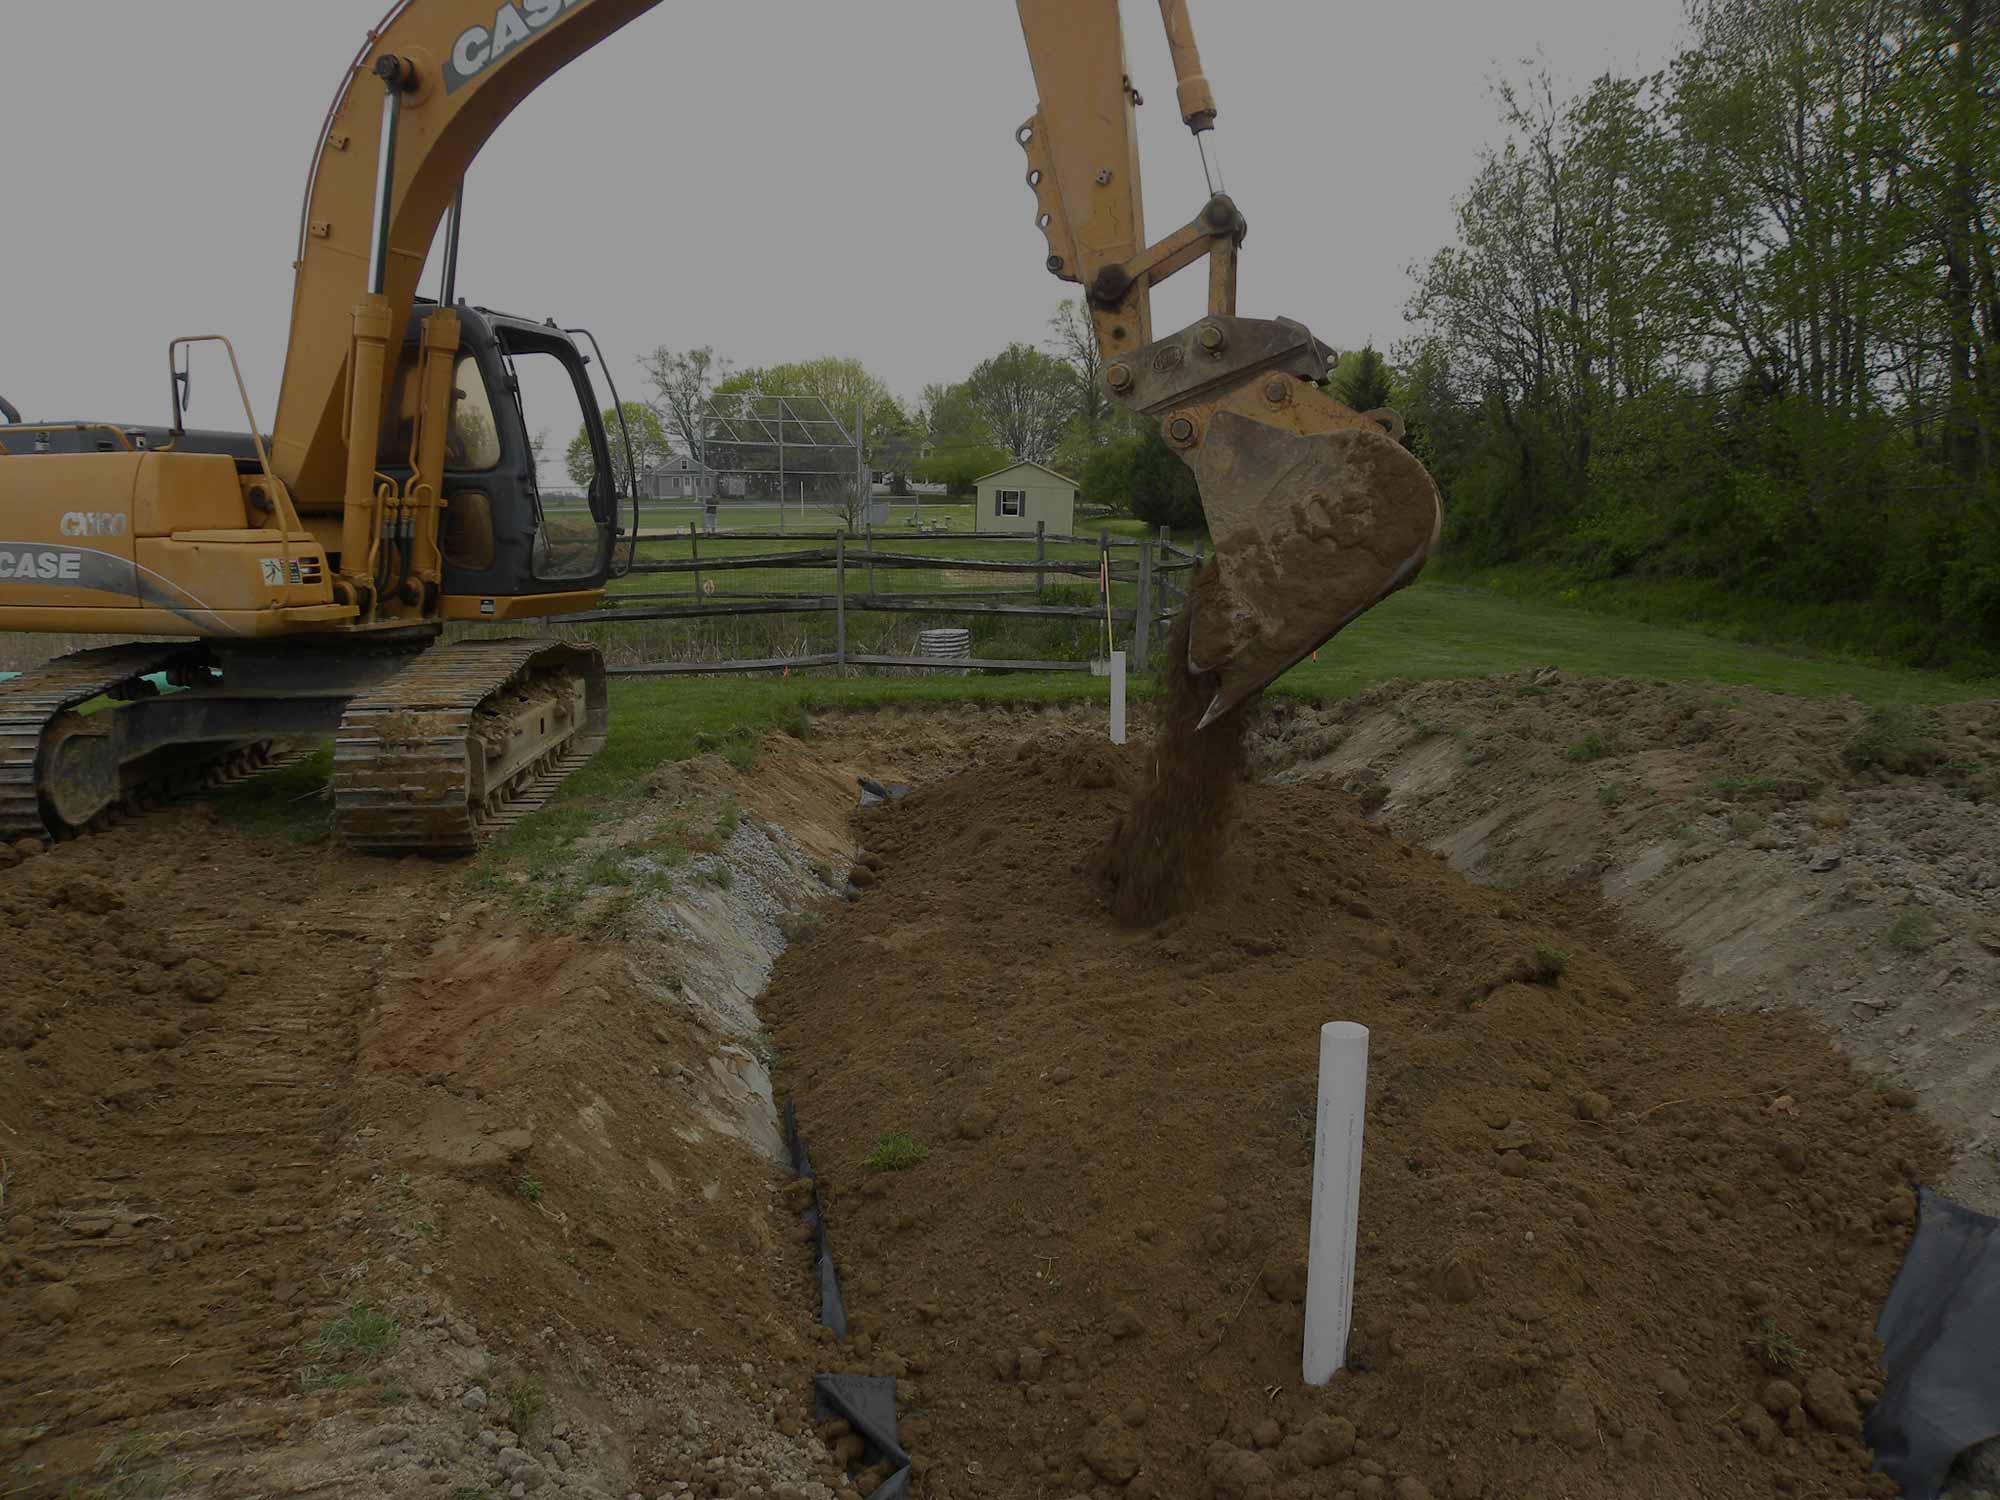 Large backhoe filling a dirt hole at job site